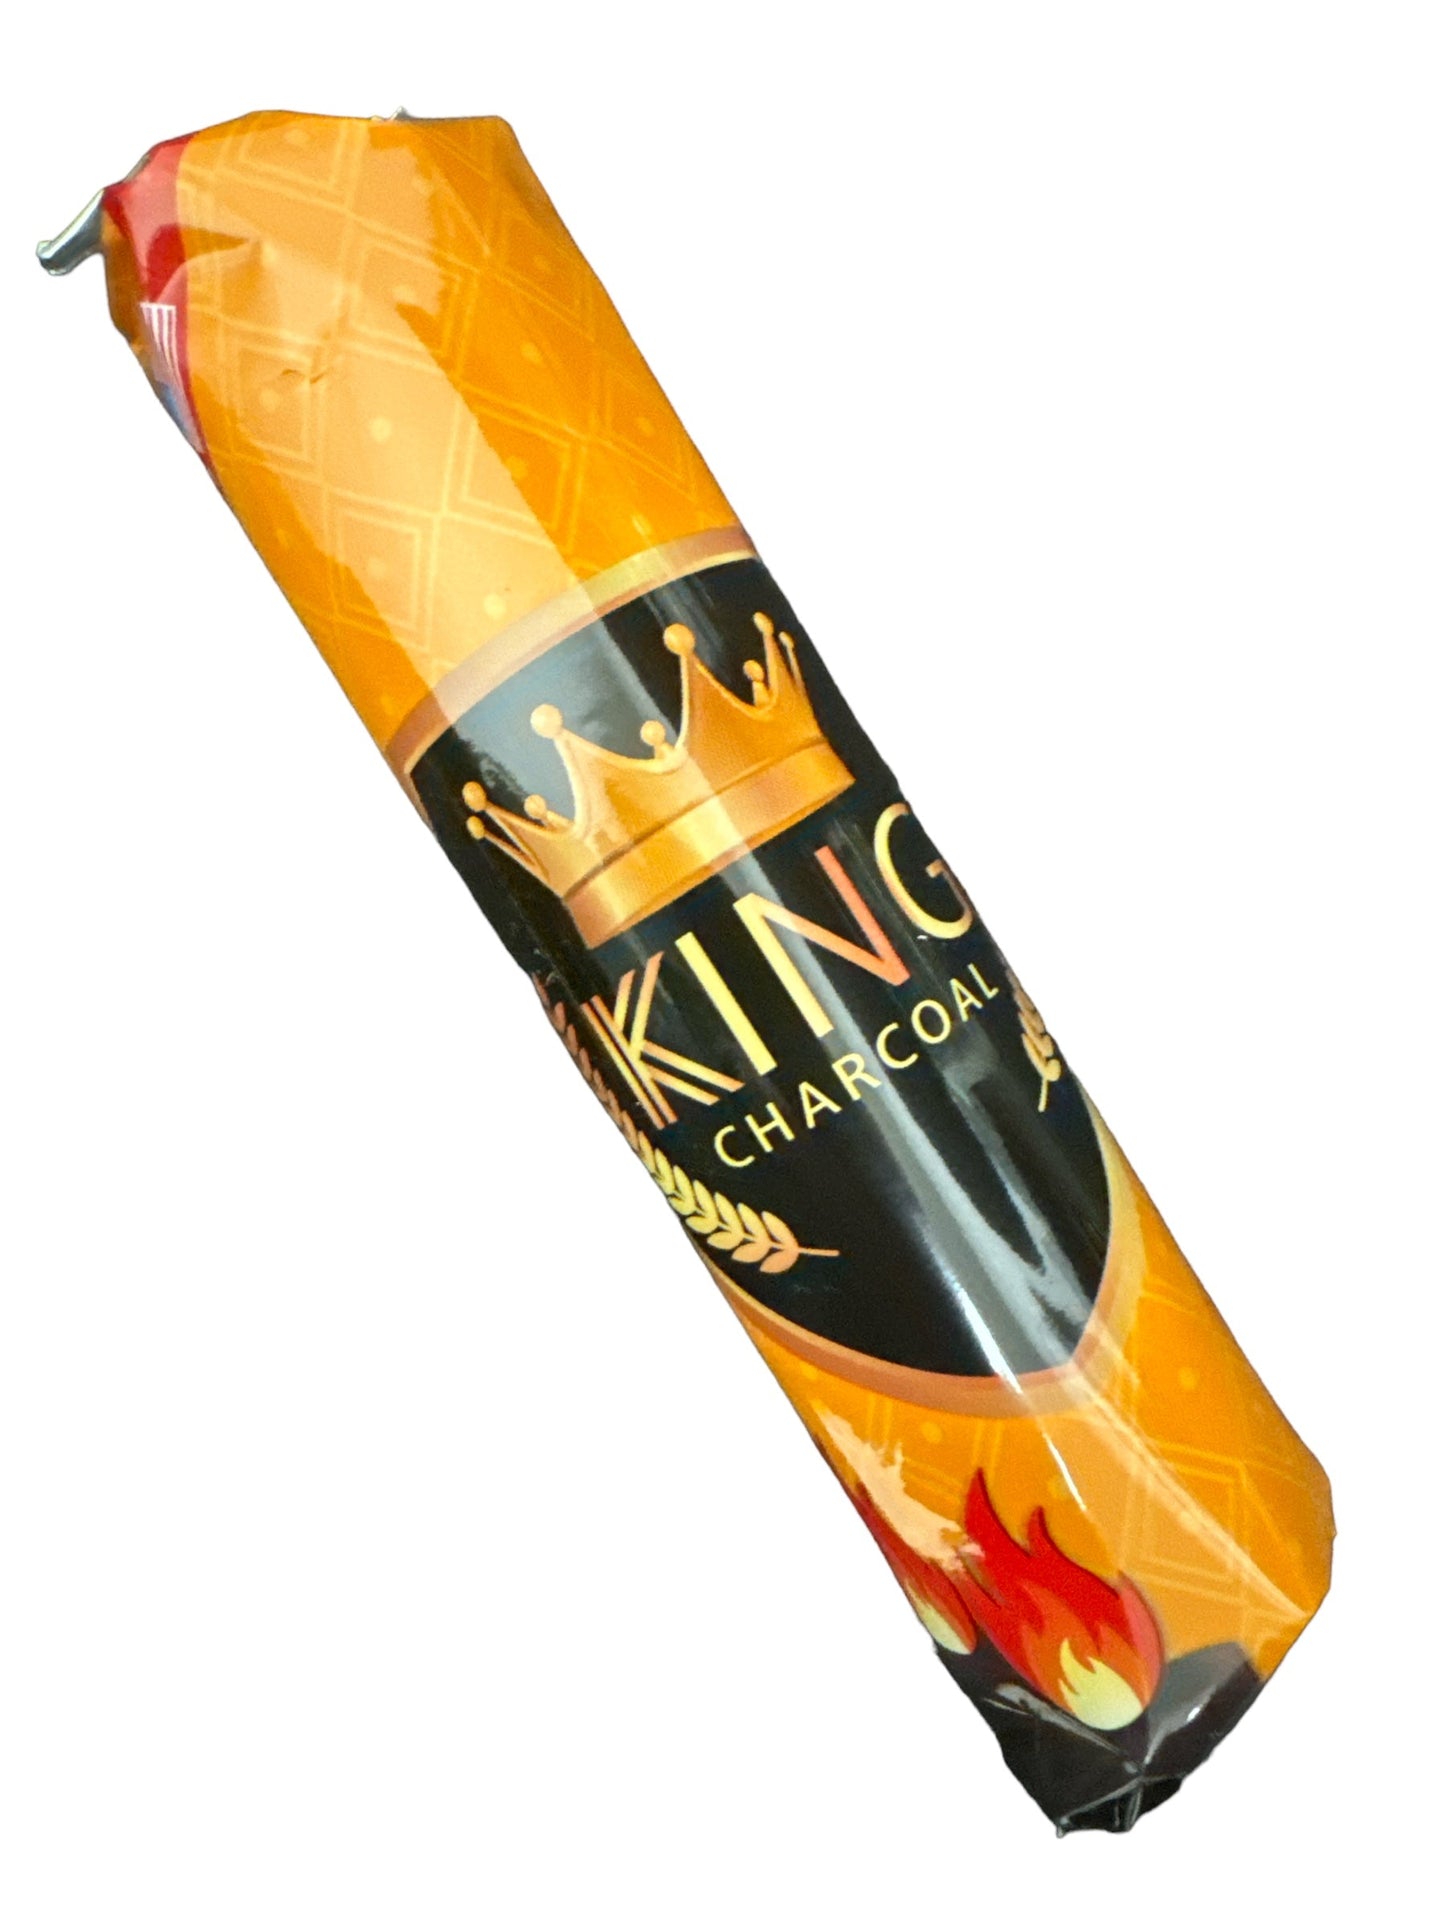 King Charcoal  fast burning carbon  for Incense Burn 10 tablets